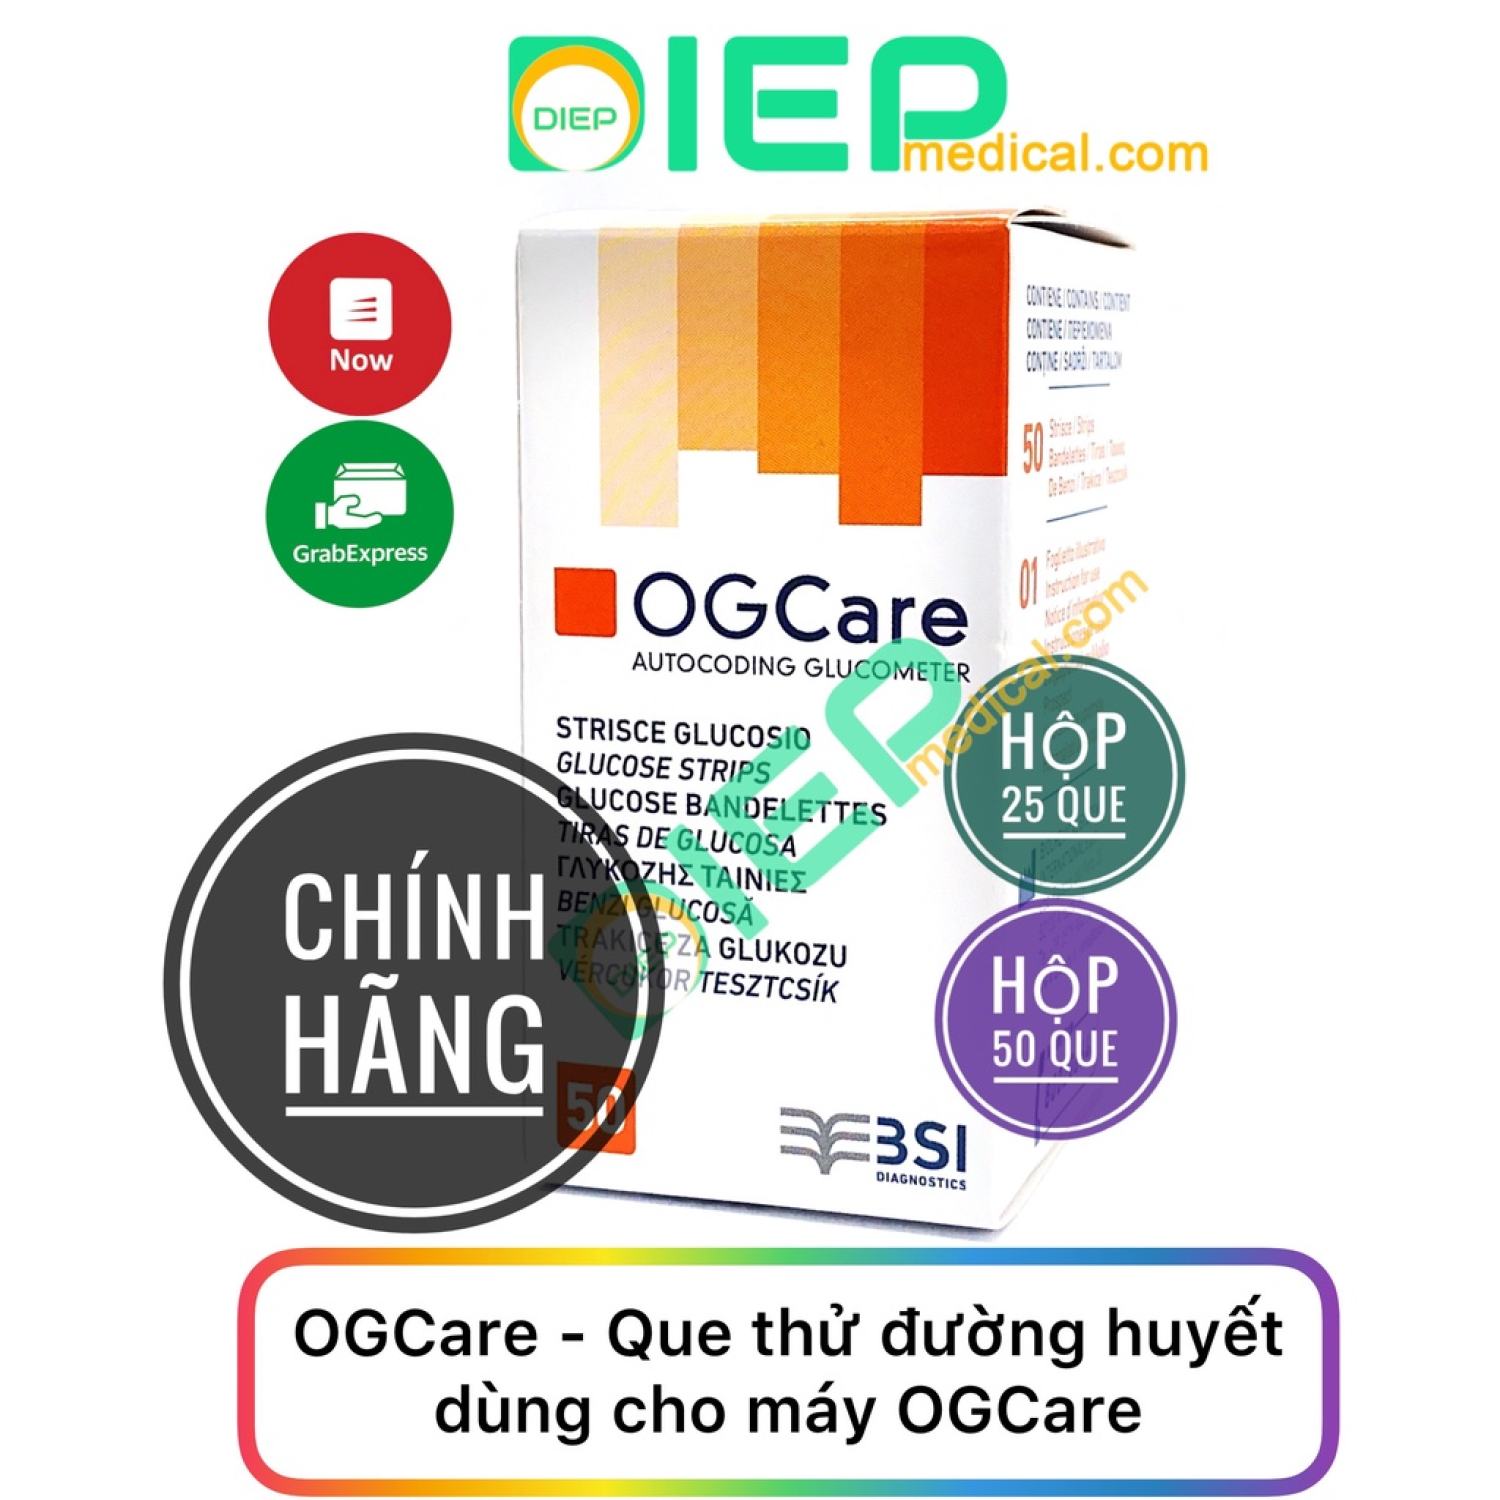 OGCare 25 QUE hoặc 50 QUE - Que thử đường huyết dùng cho máy OGCare Chính